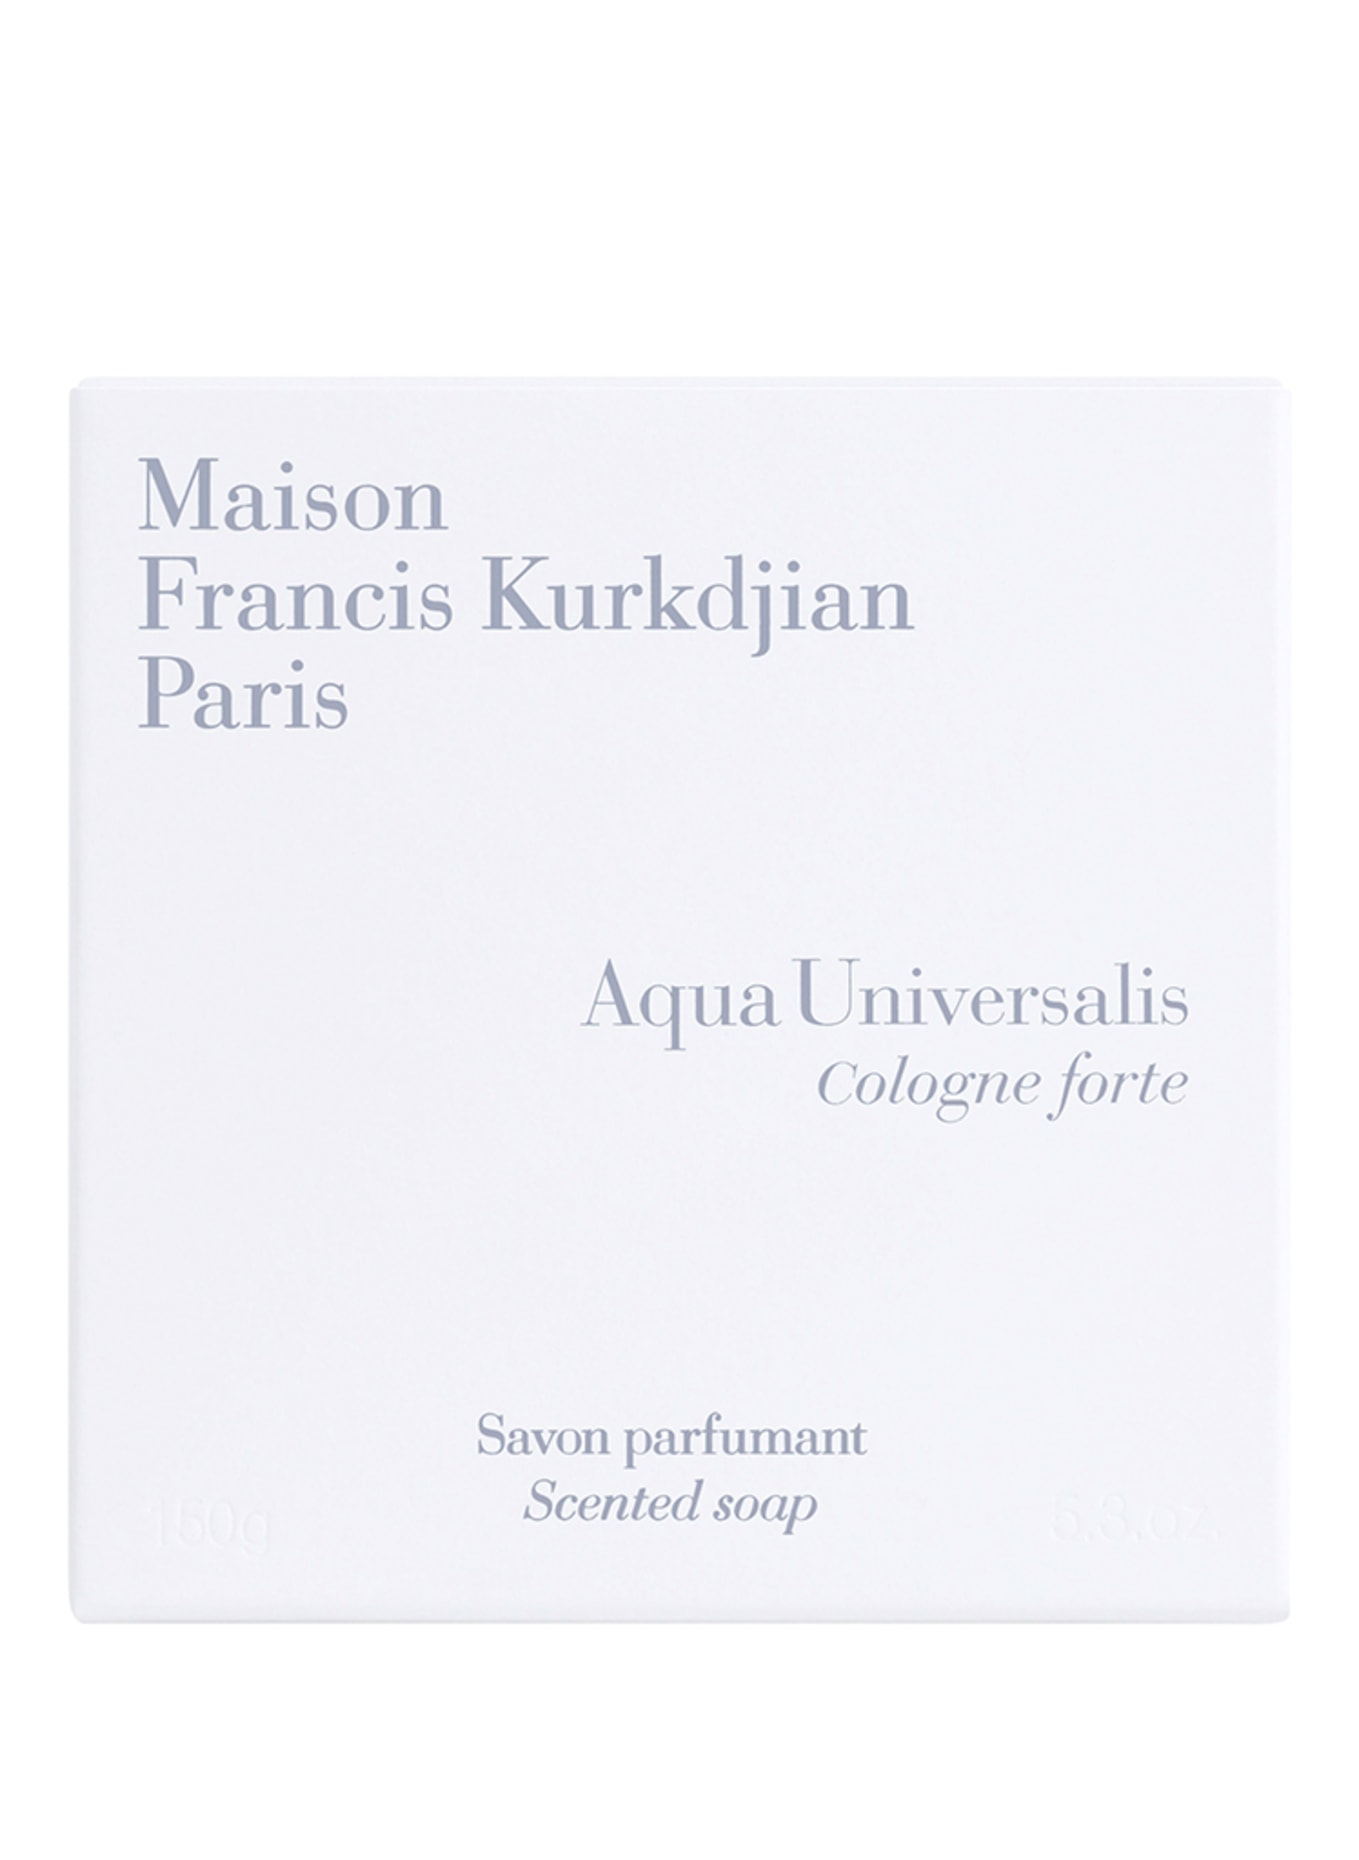 Maison Francis Kurkdjian Paris AQUA UNIVERSALIS COLOGNE FORTE (Bild 2)